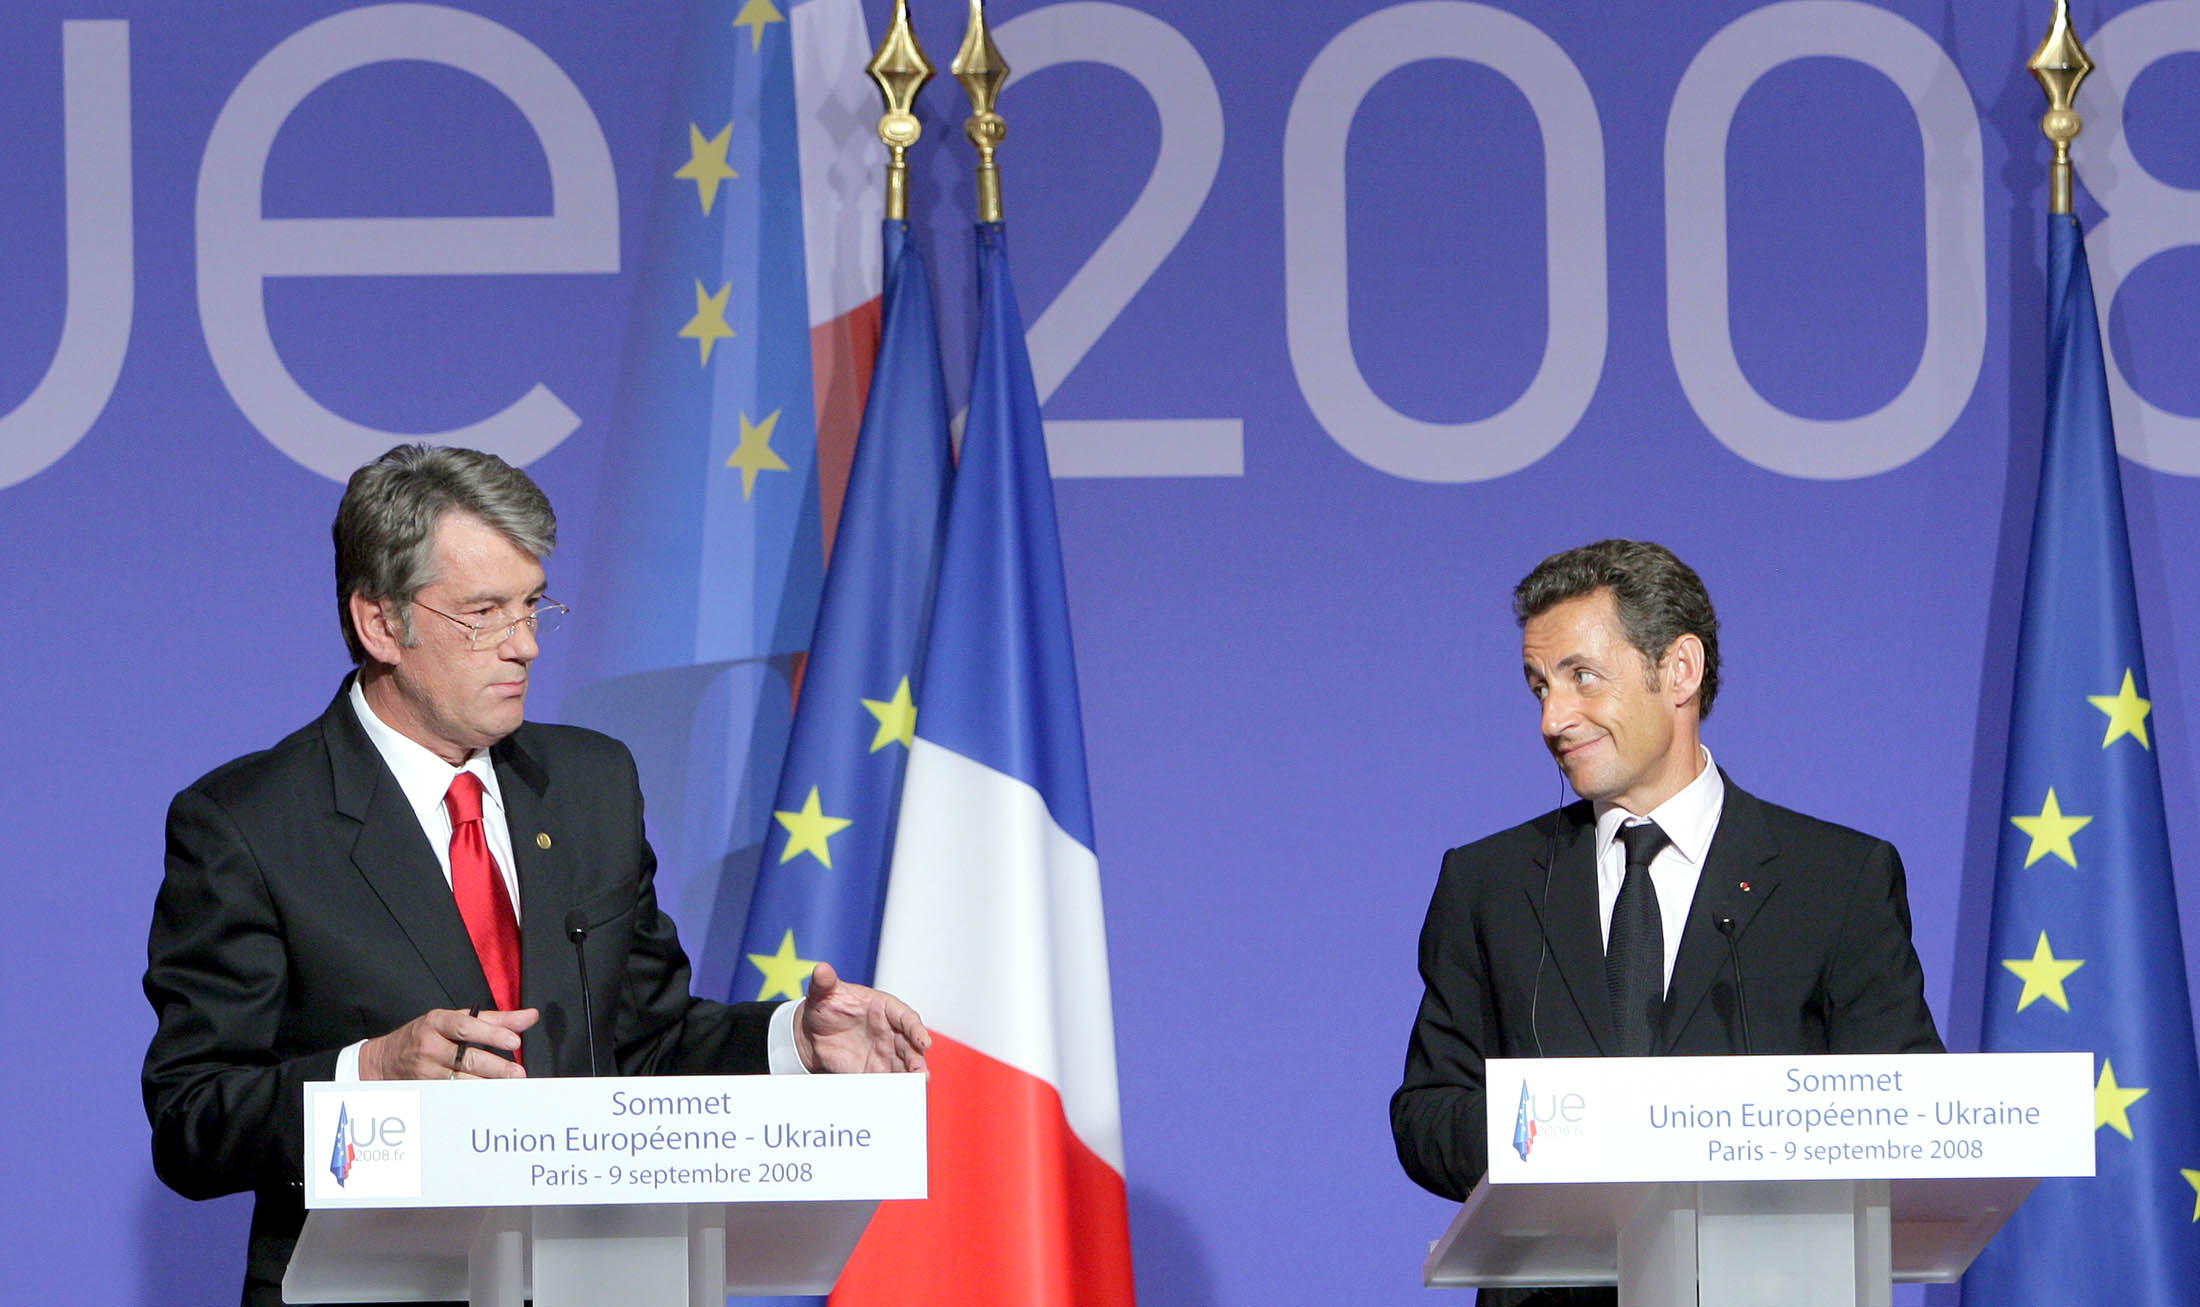 Nicolas Sarkozy to the right